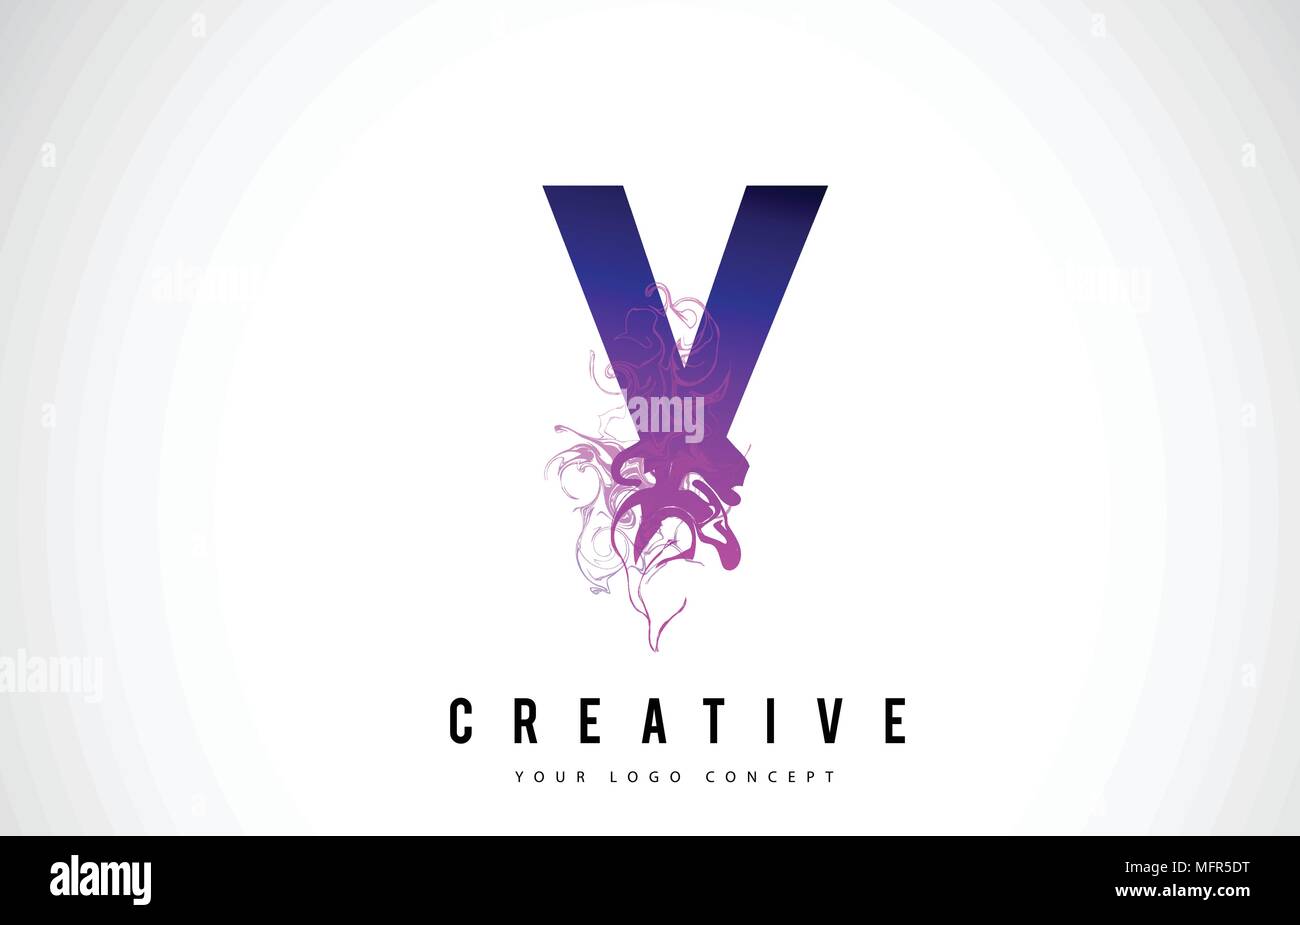 V Lettre Violet Logo Design créatif avec effet liquide Vector Illustration. Illustration de Vecteur